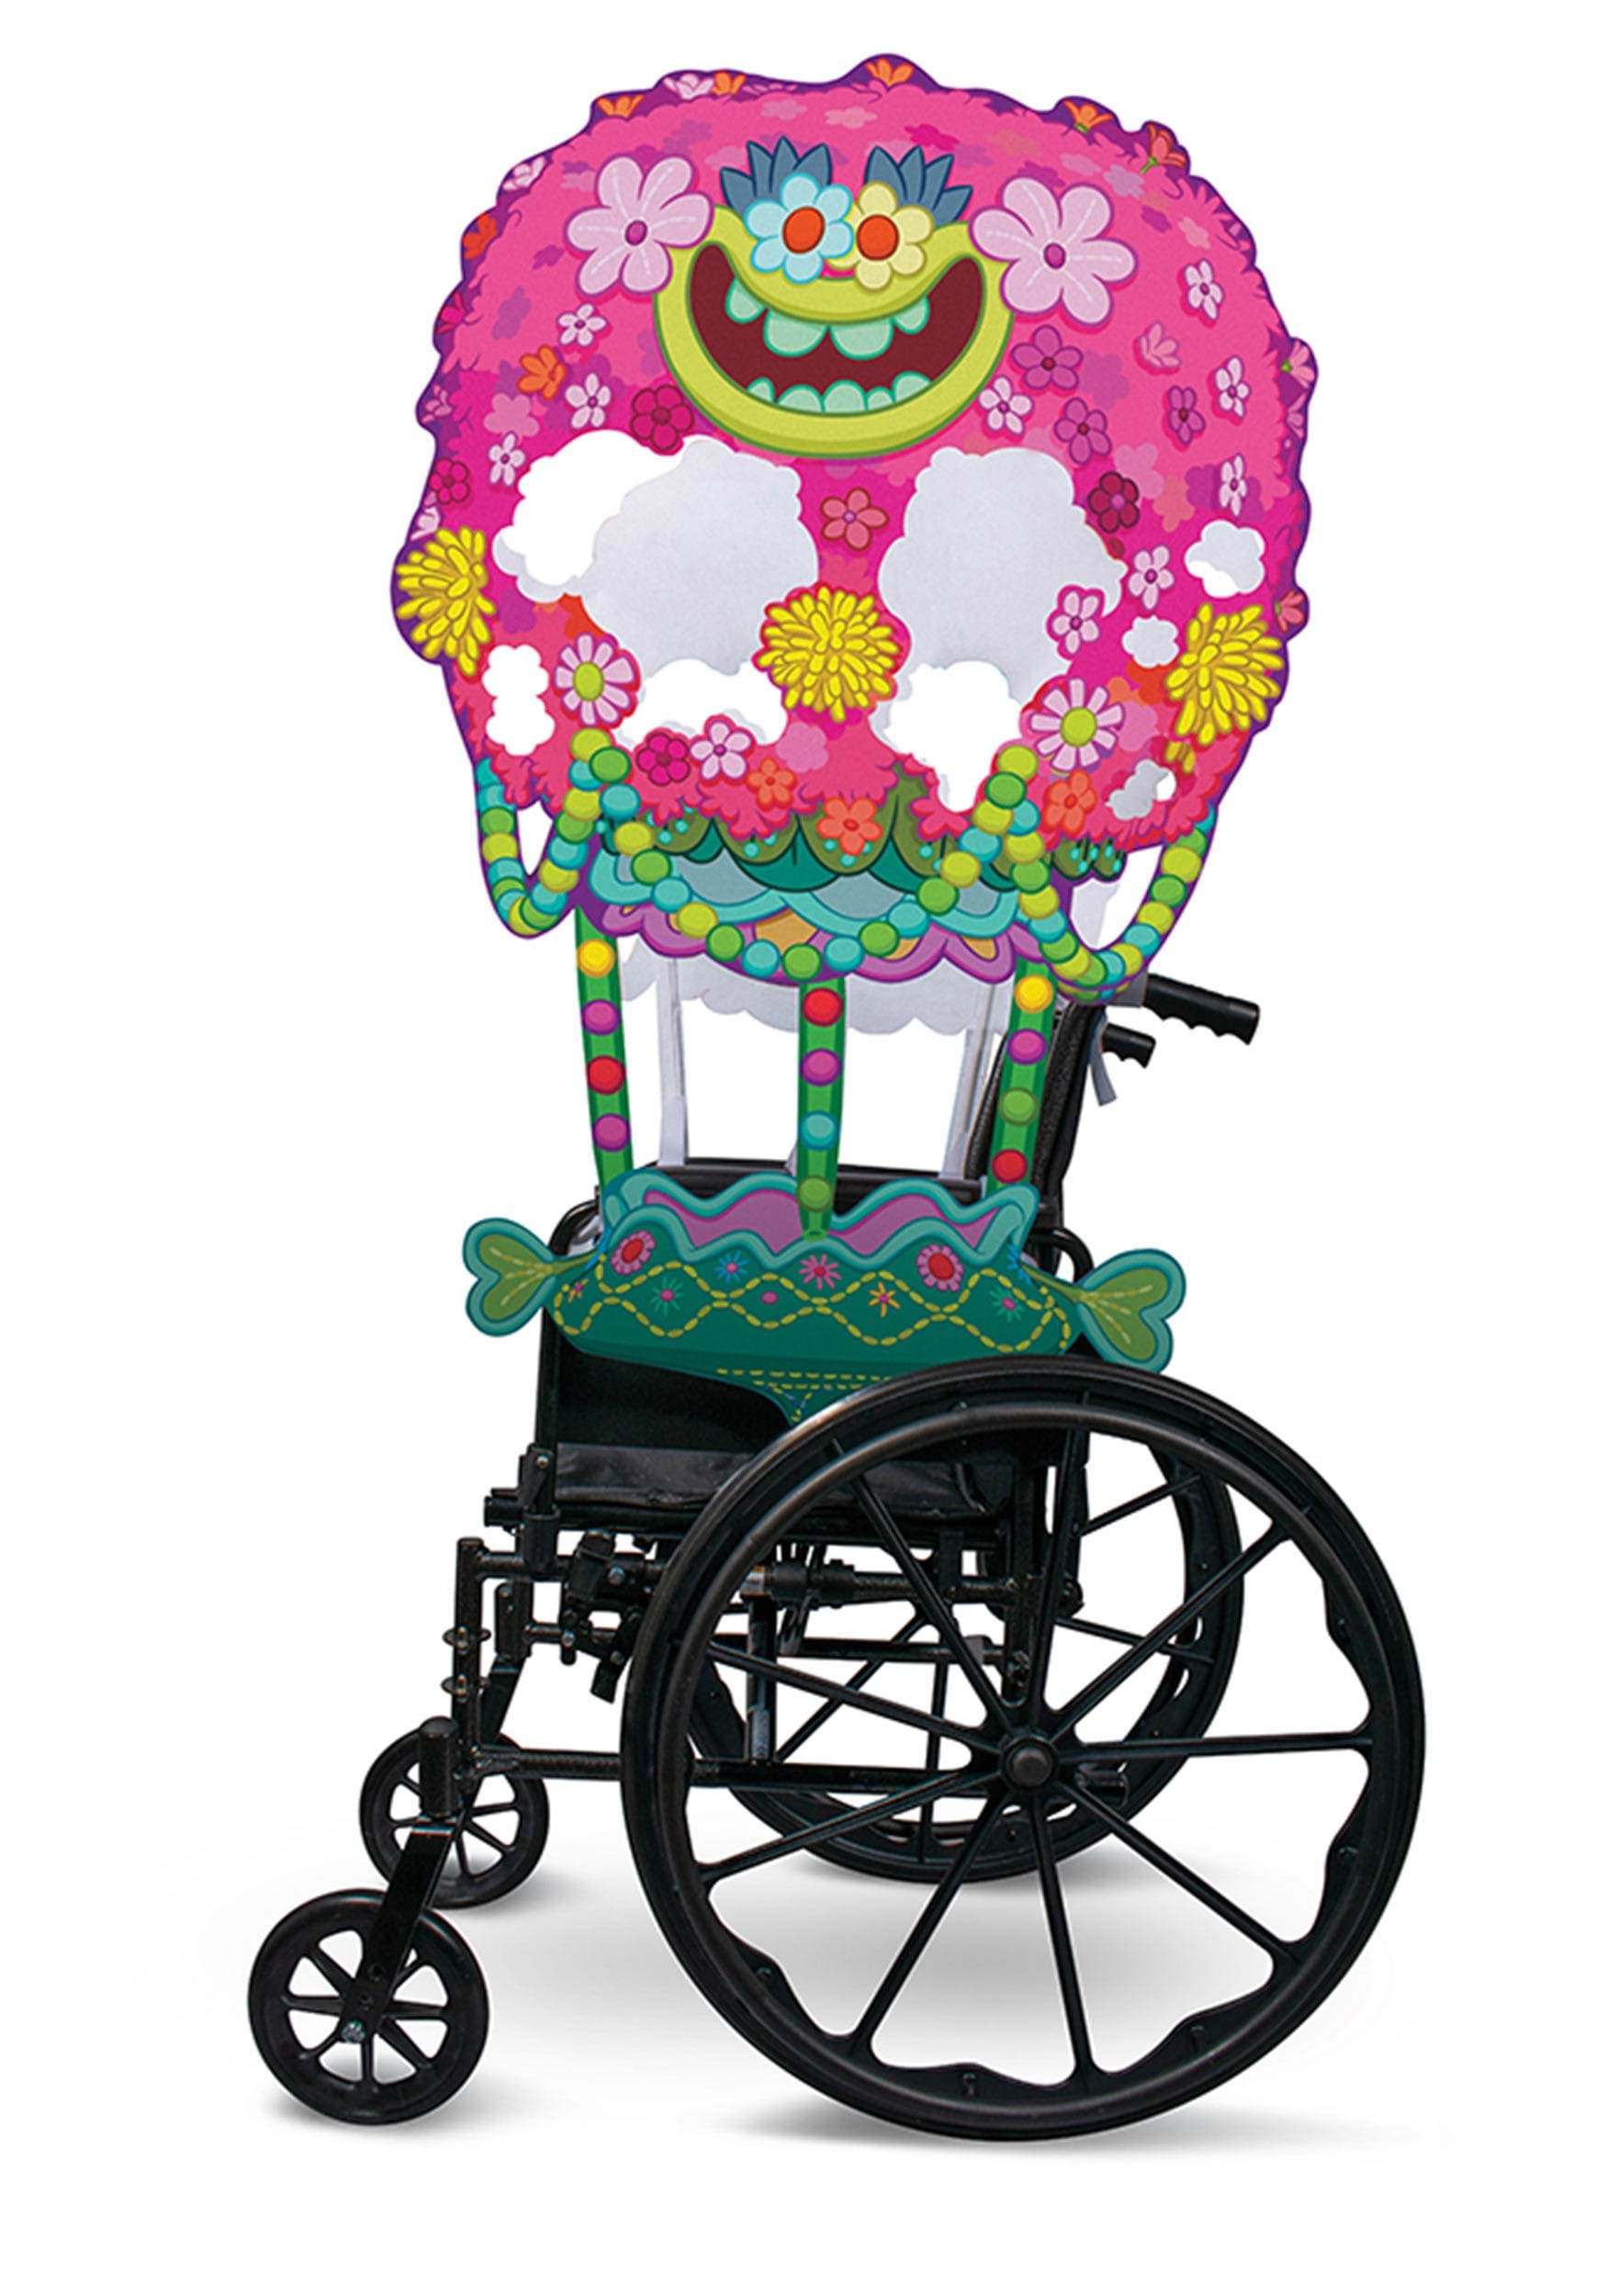 Trolls Adaptive Wheelchair Costume Cover